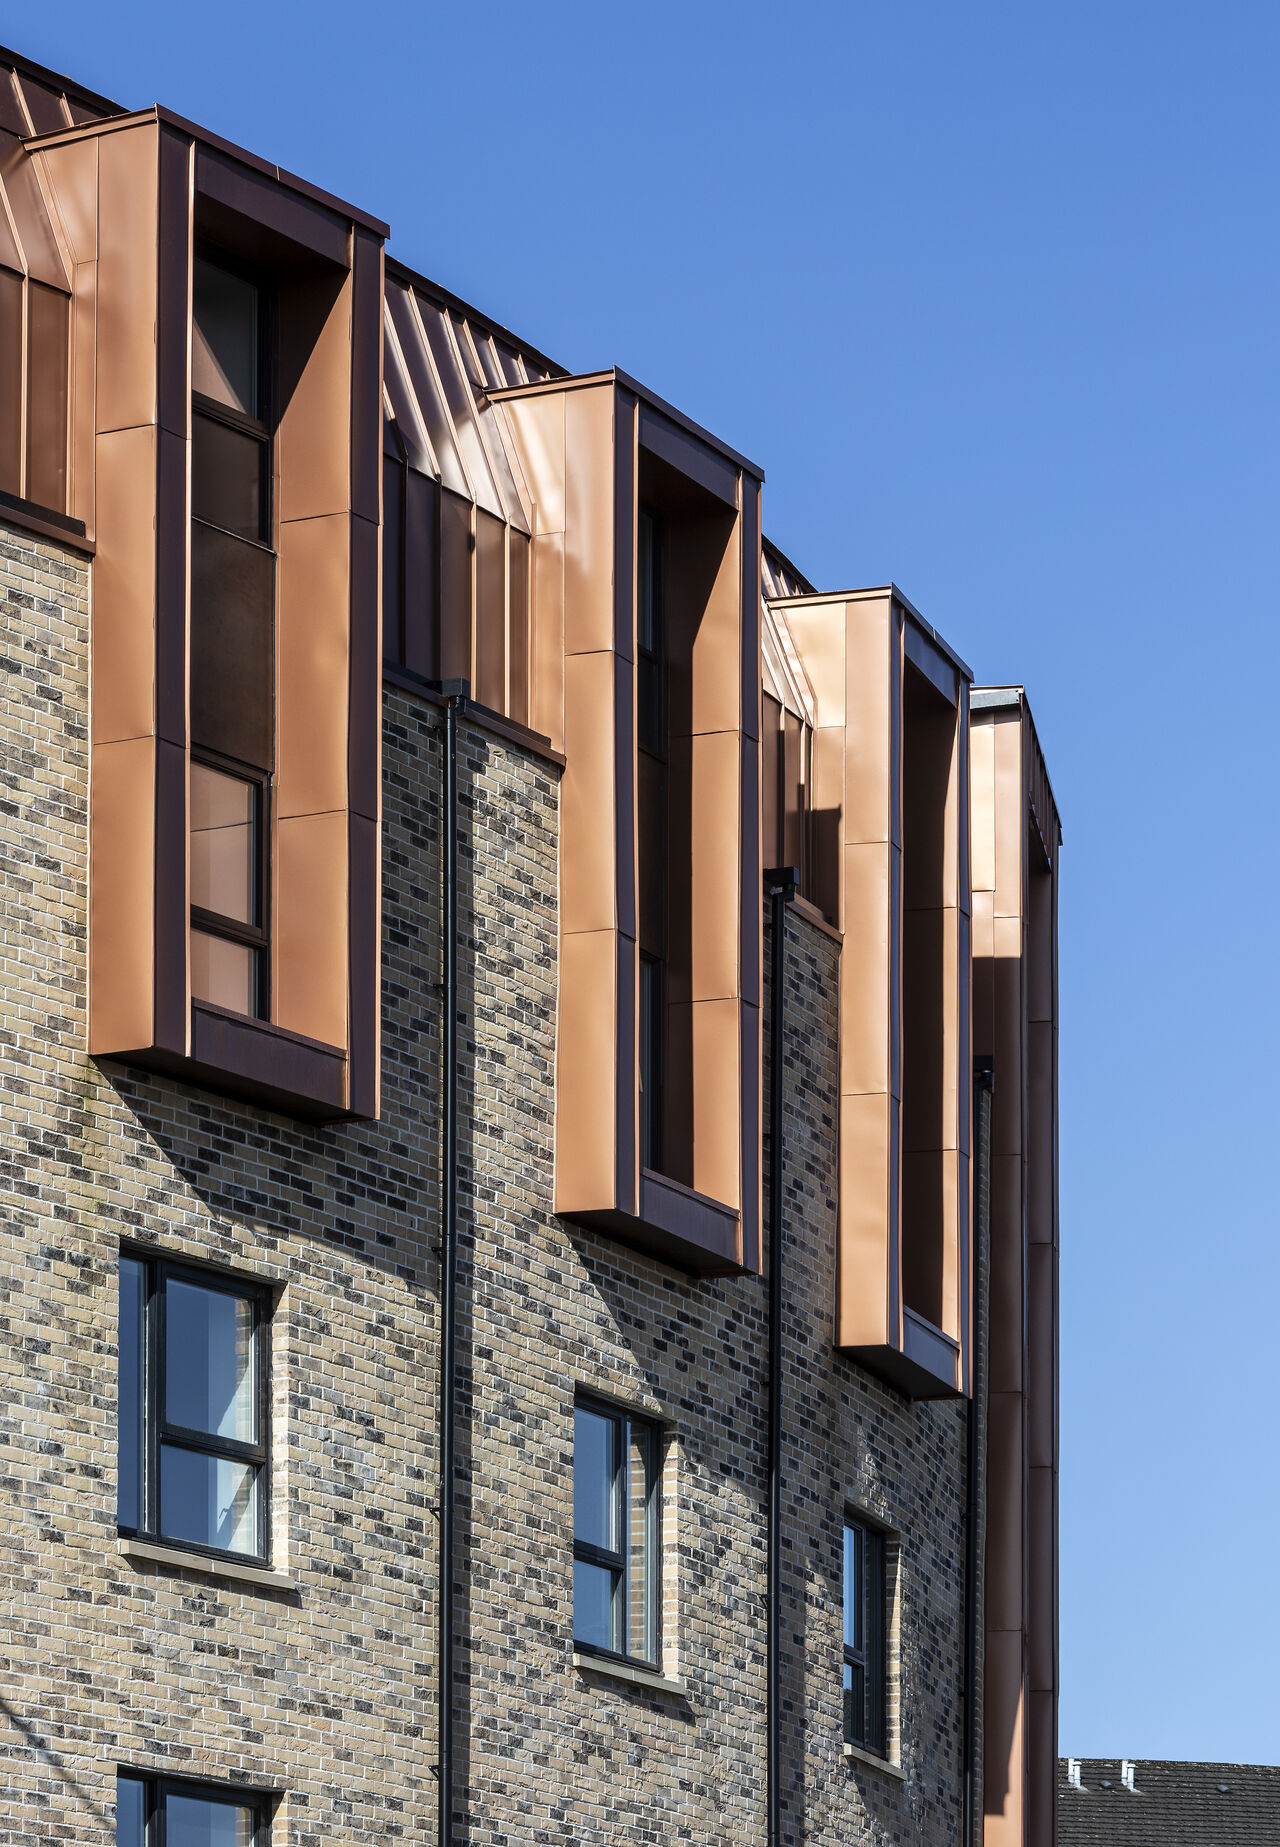 Architects' Showcase: Nethan Street affordable housing development by Mast Architects